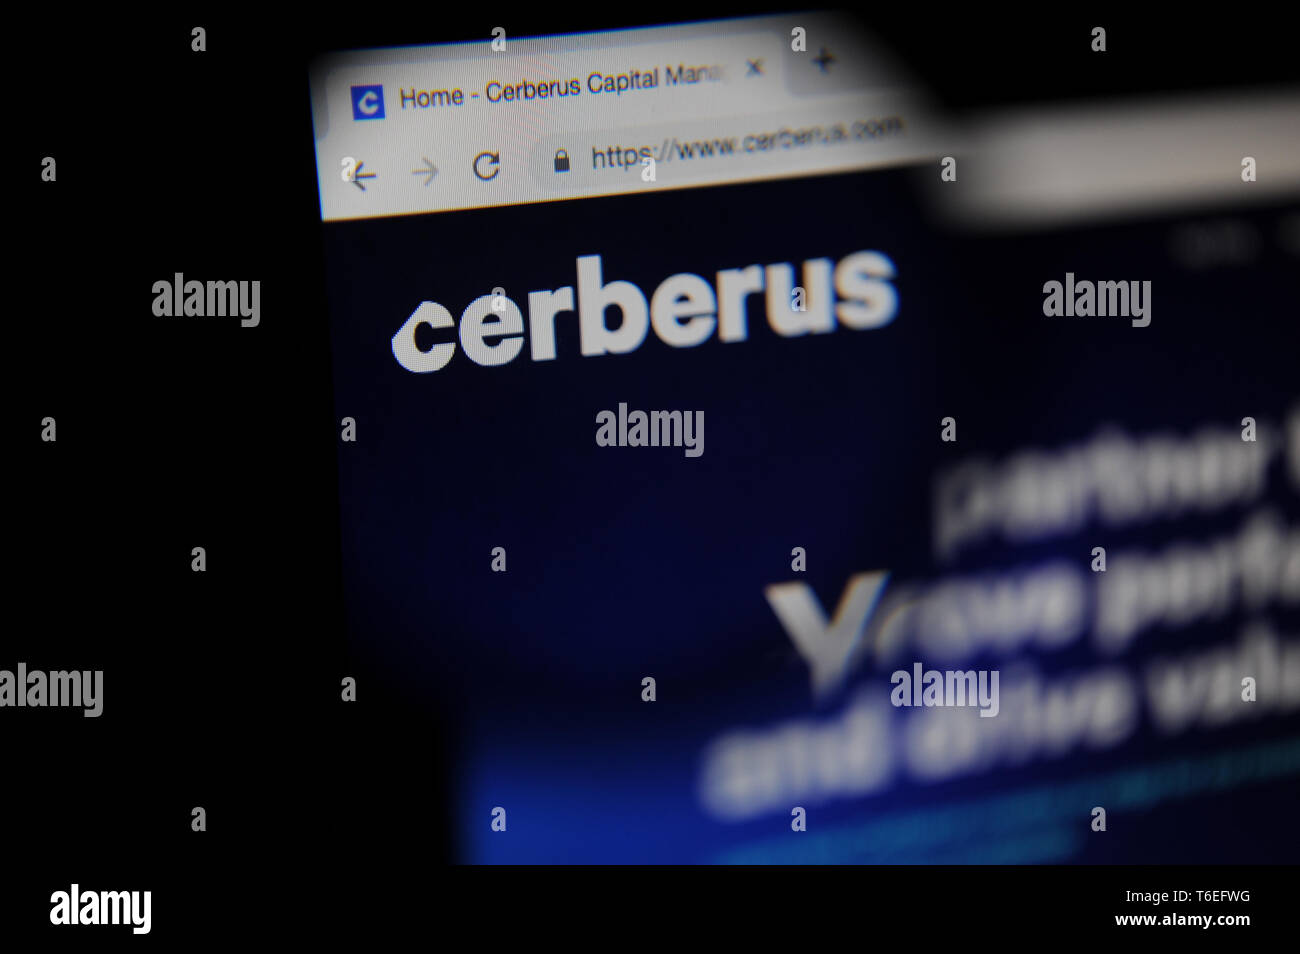 Cerberus Capital Management Stock Photo